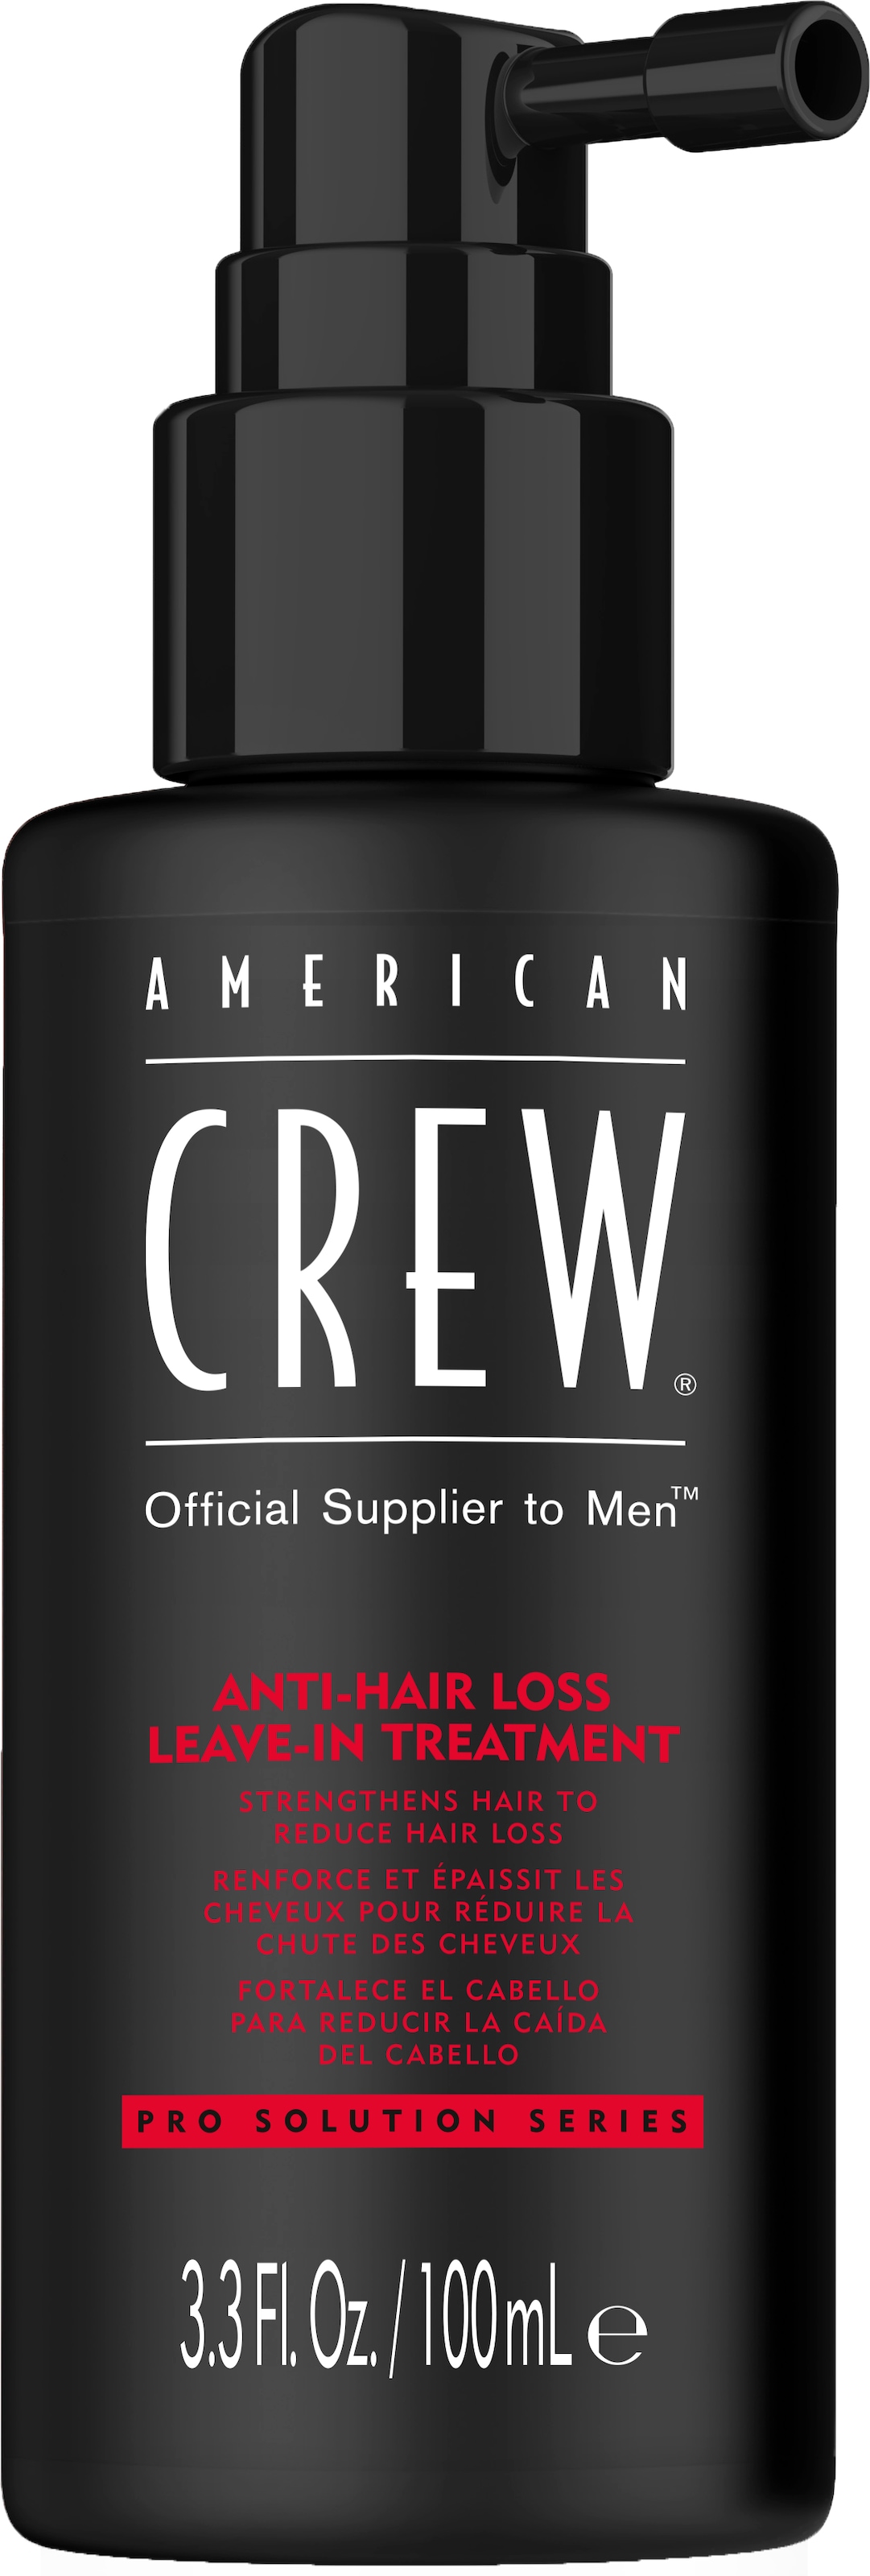 American Crew Leave-in Pflege bei online »Anti-Hair Loss UNIVERSAL Treatment«